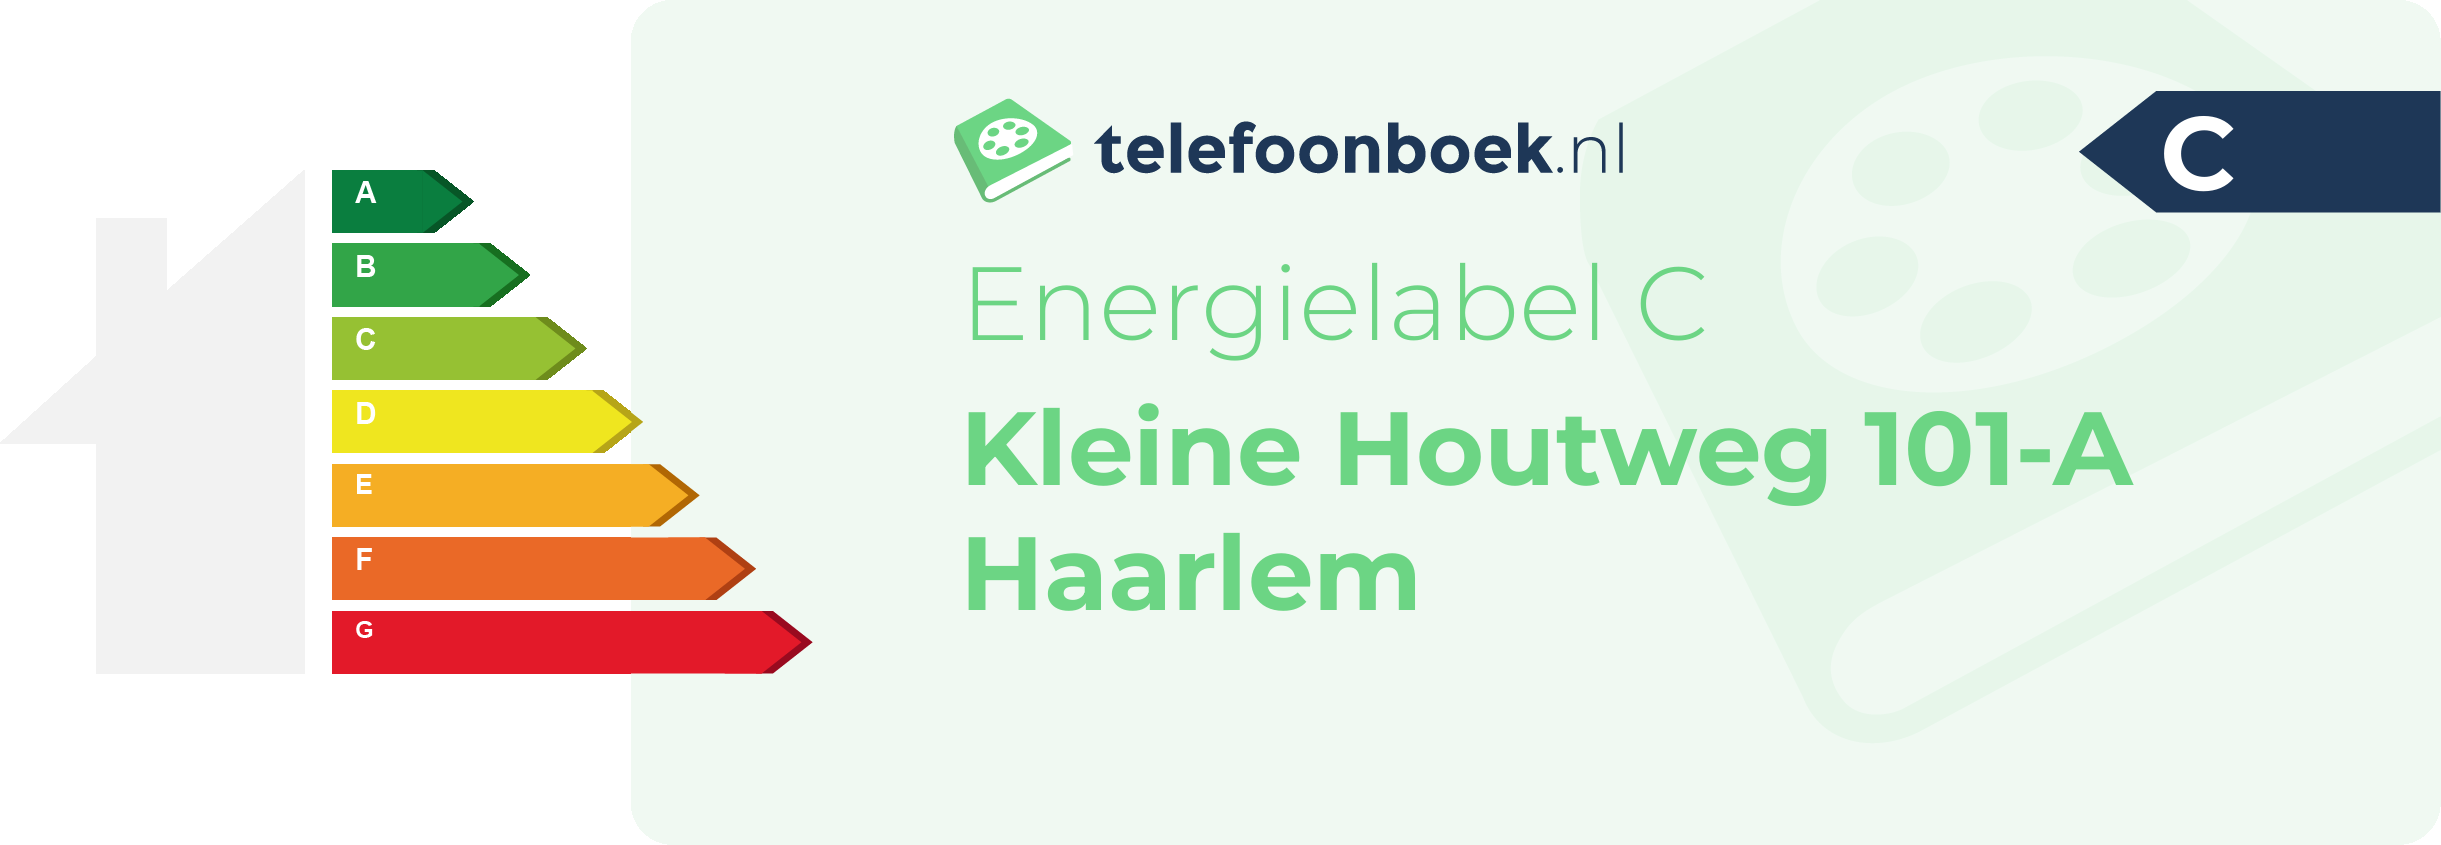 Energielabel Kleine Houtweg 101-A Haarlem